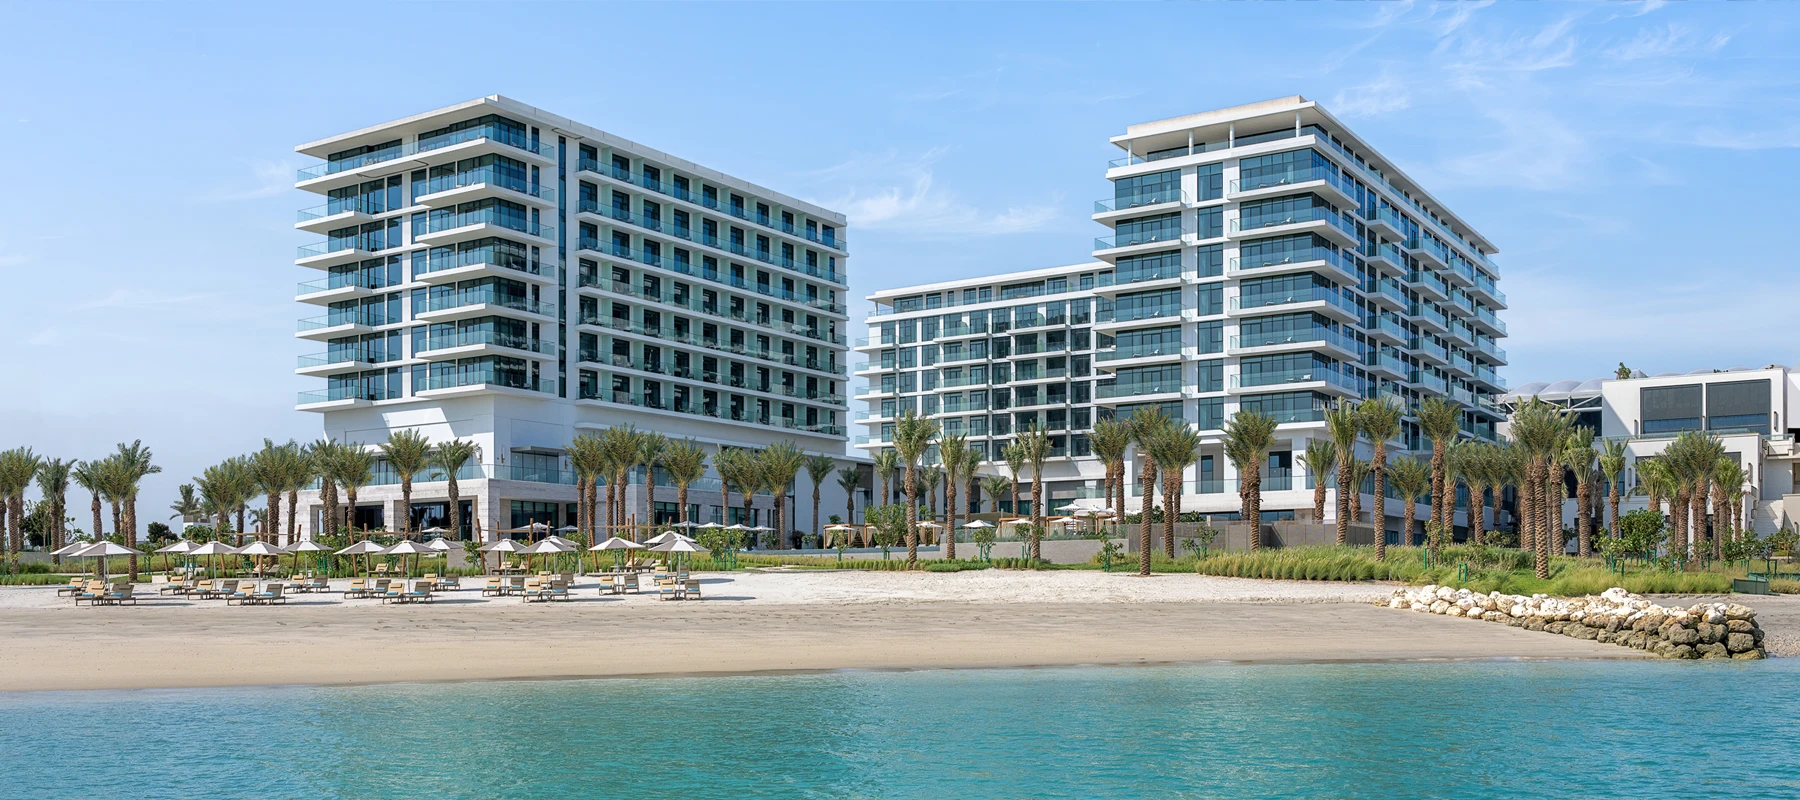 Featured image for “Address Beach Resort Bahrain”